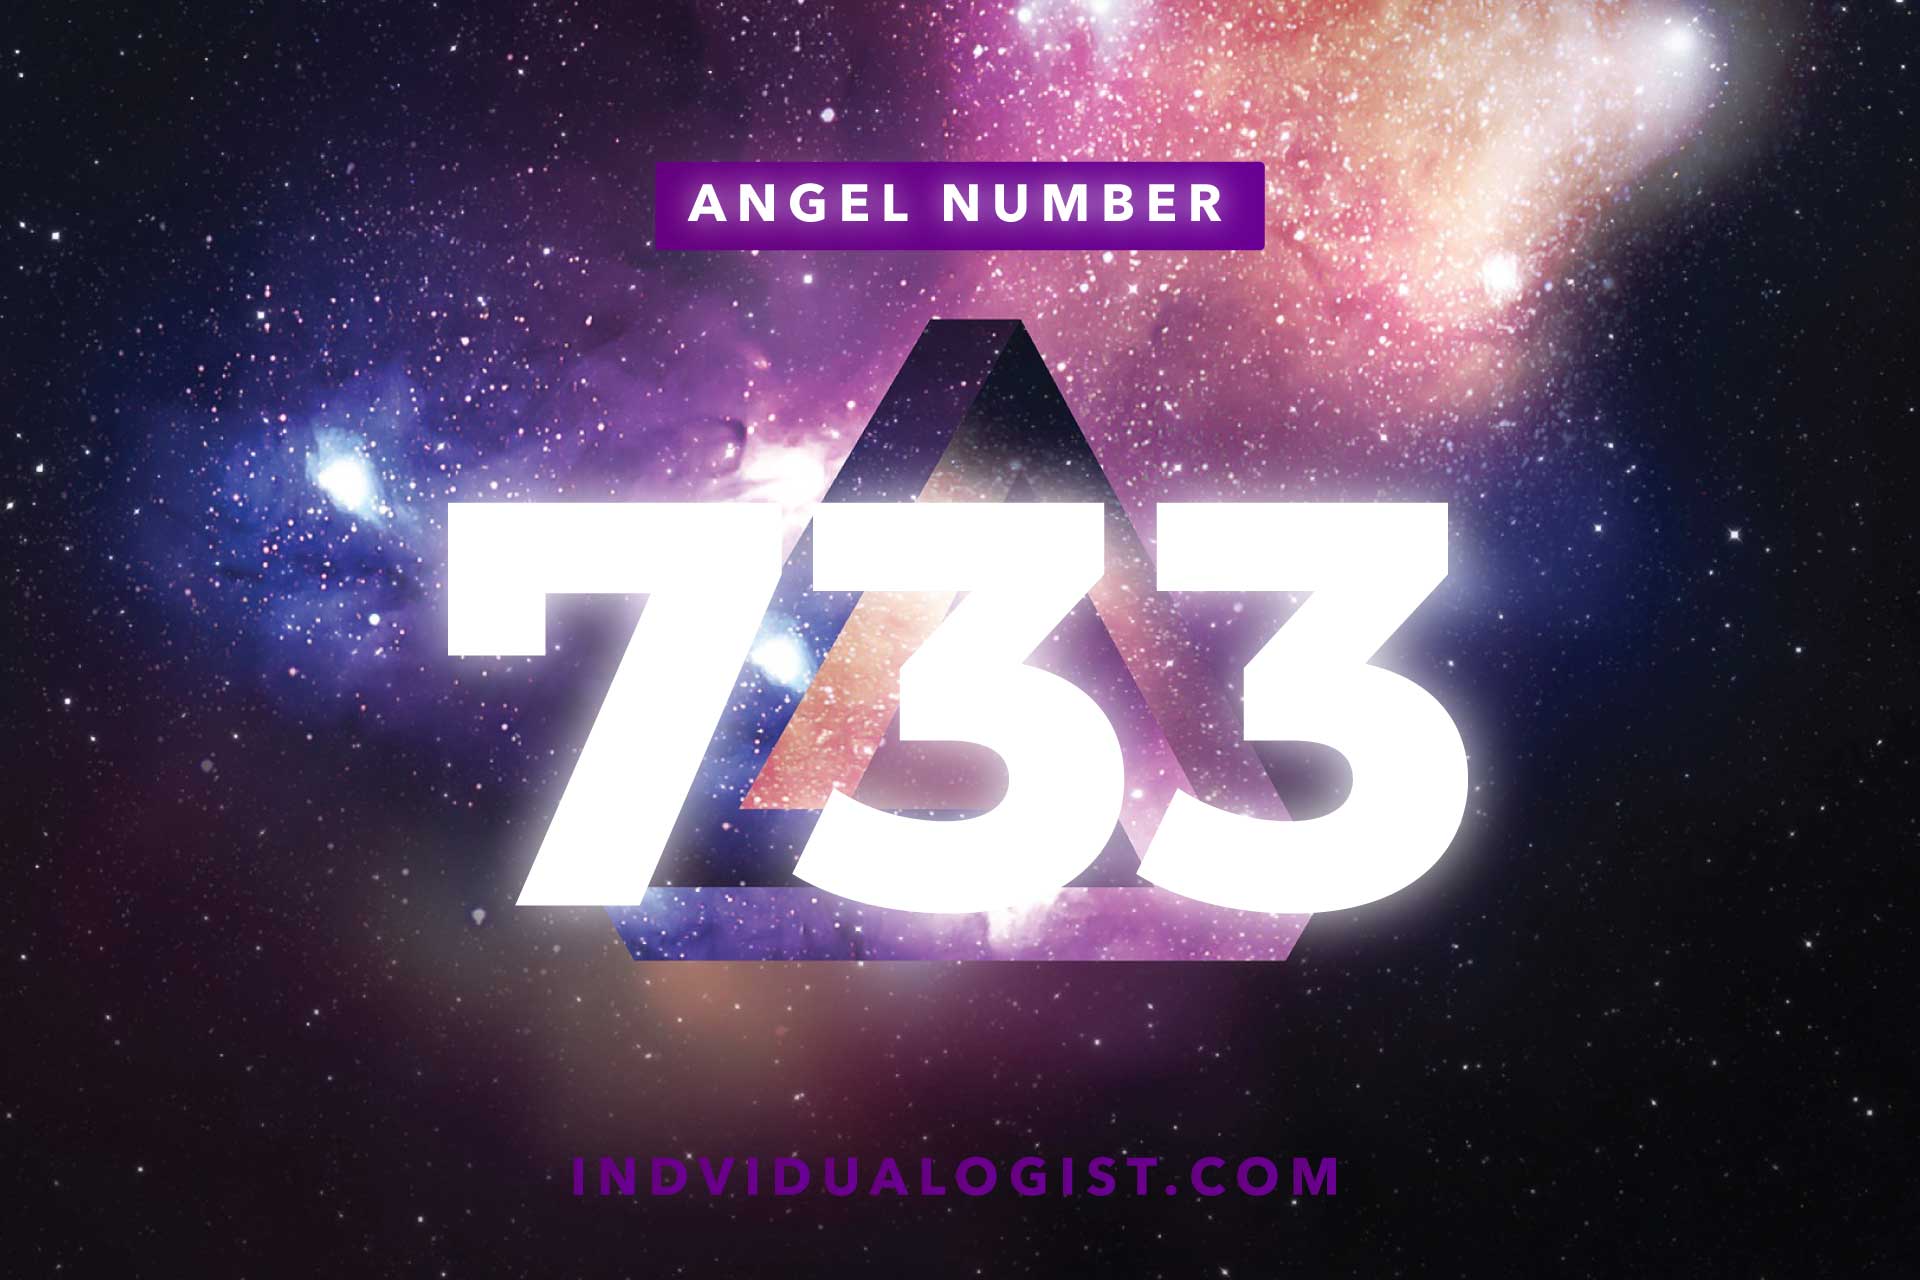 angel number 733 gift of spirituality